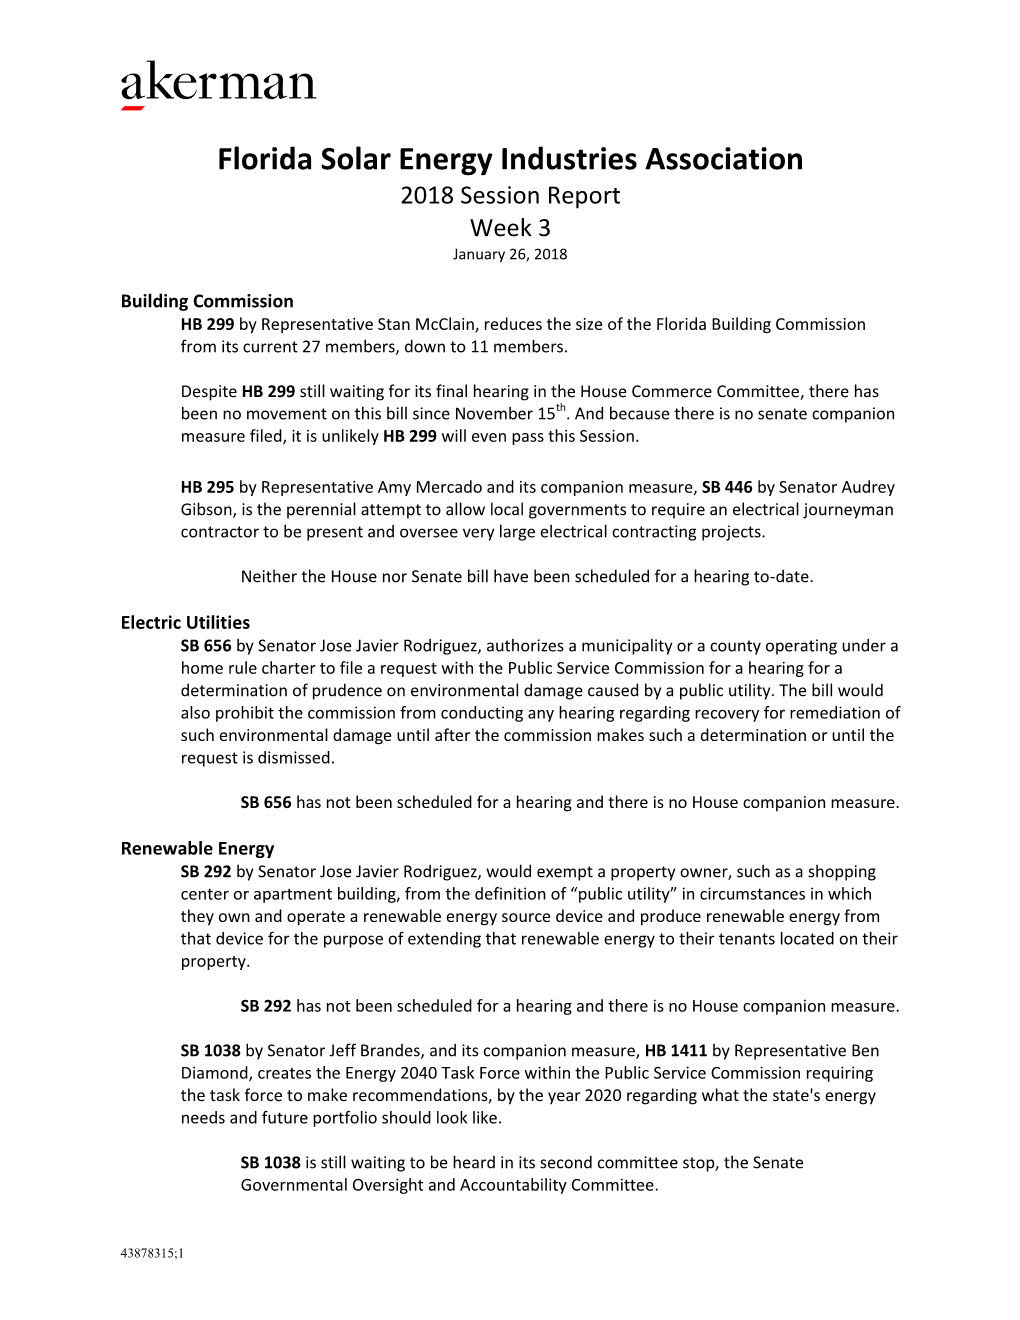 Florida Solar Energy Industries Association 2018 Session Report Week 3 January 26, 2018